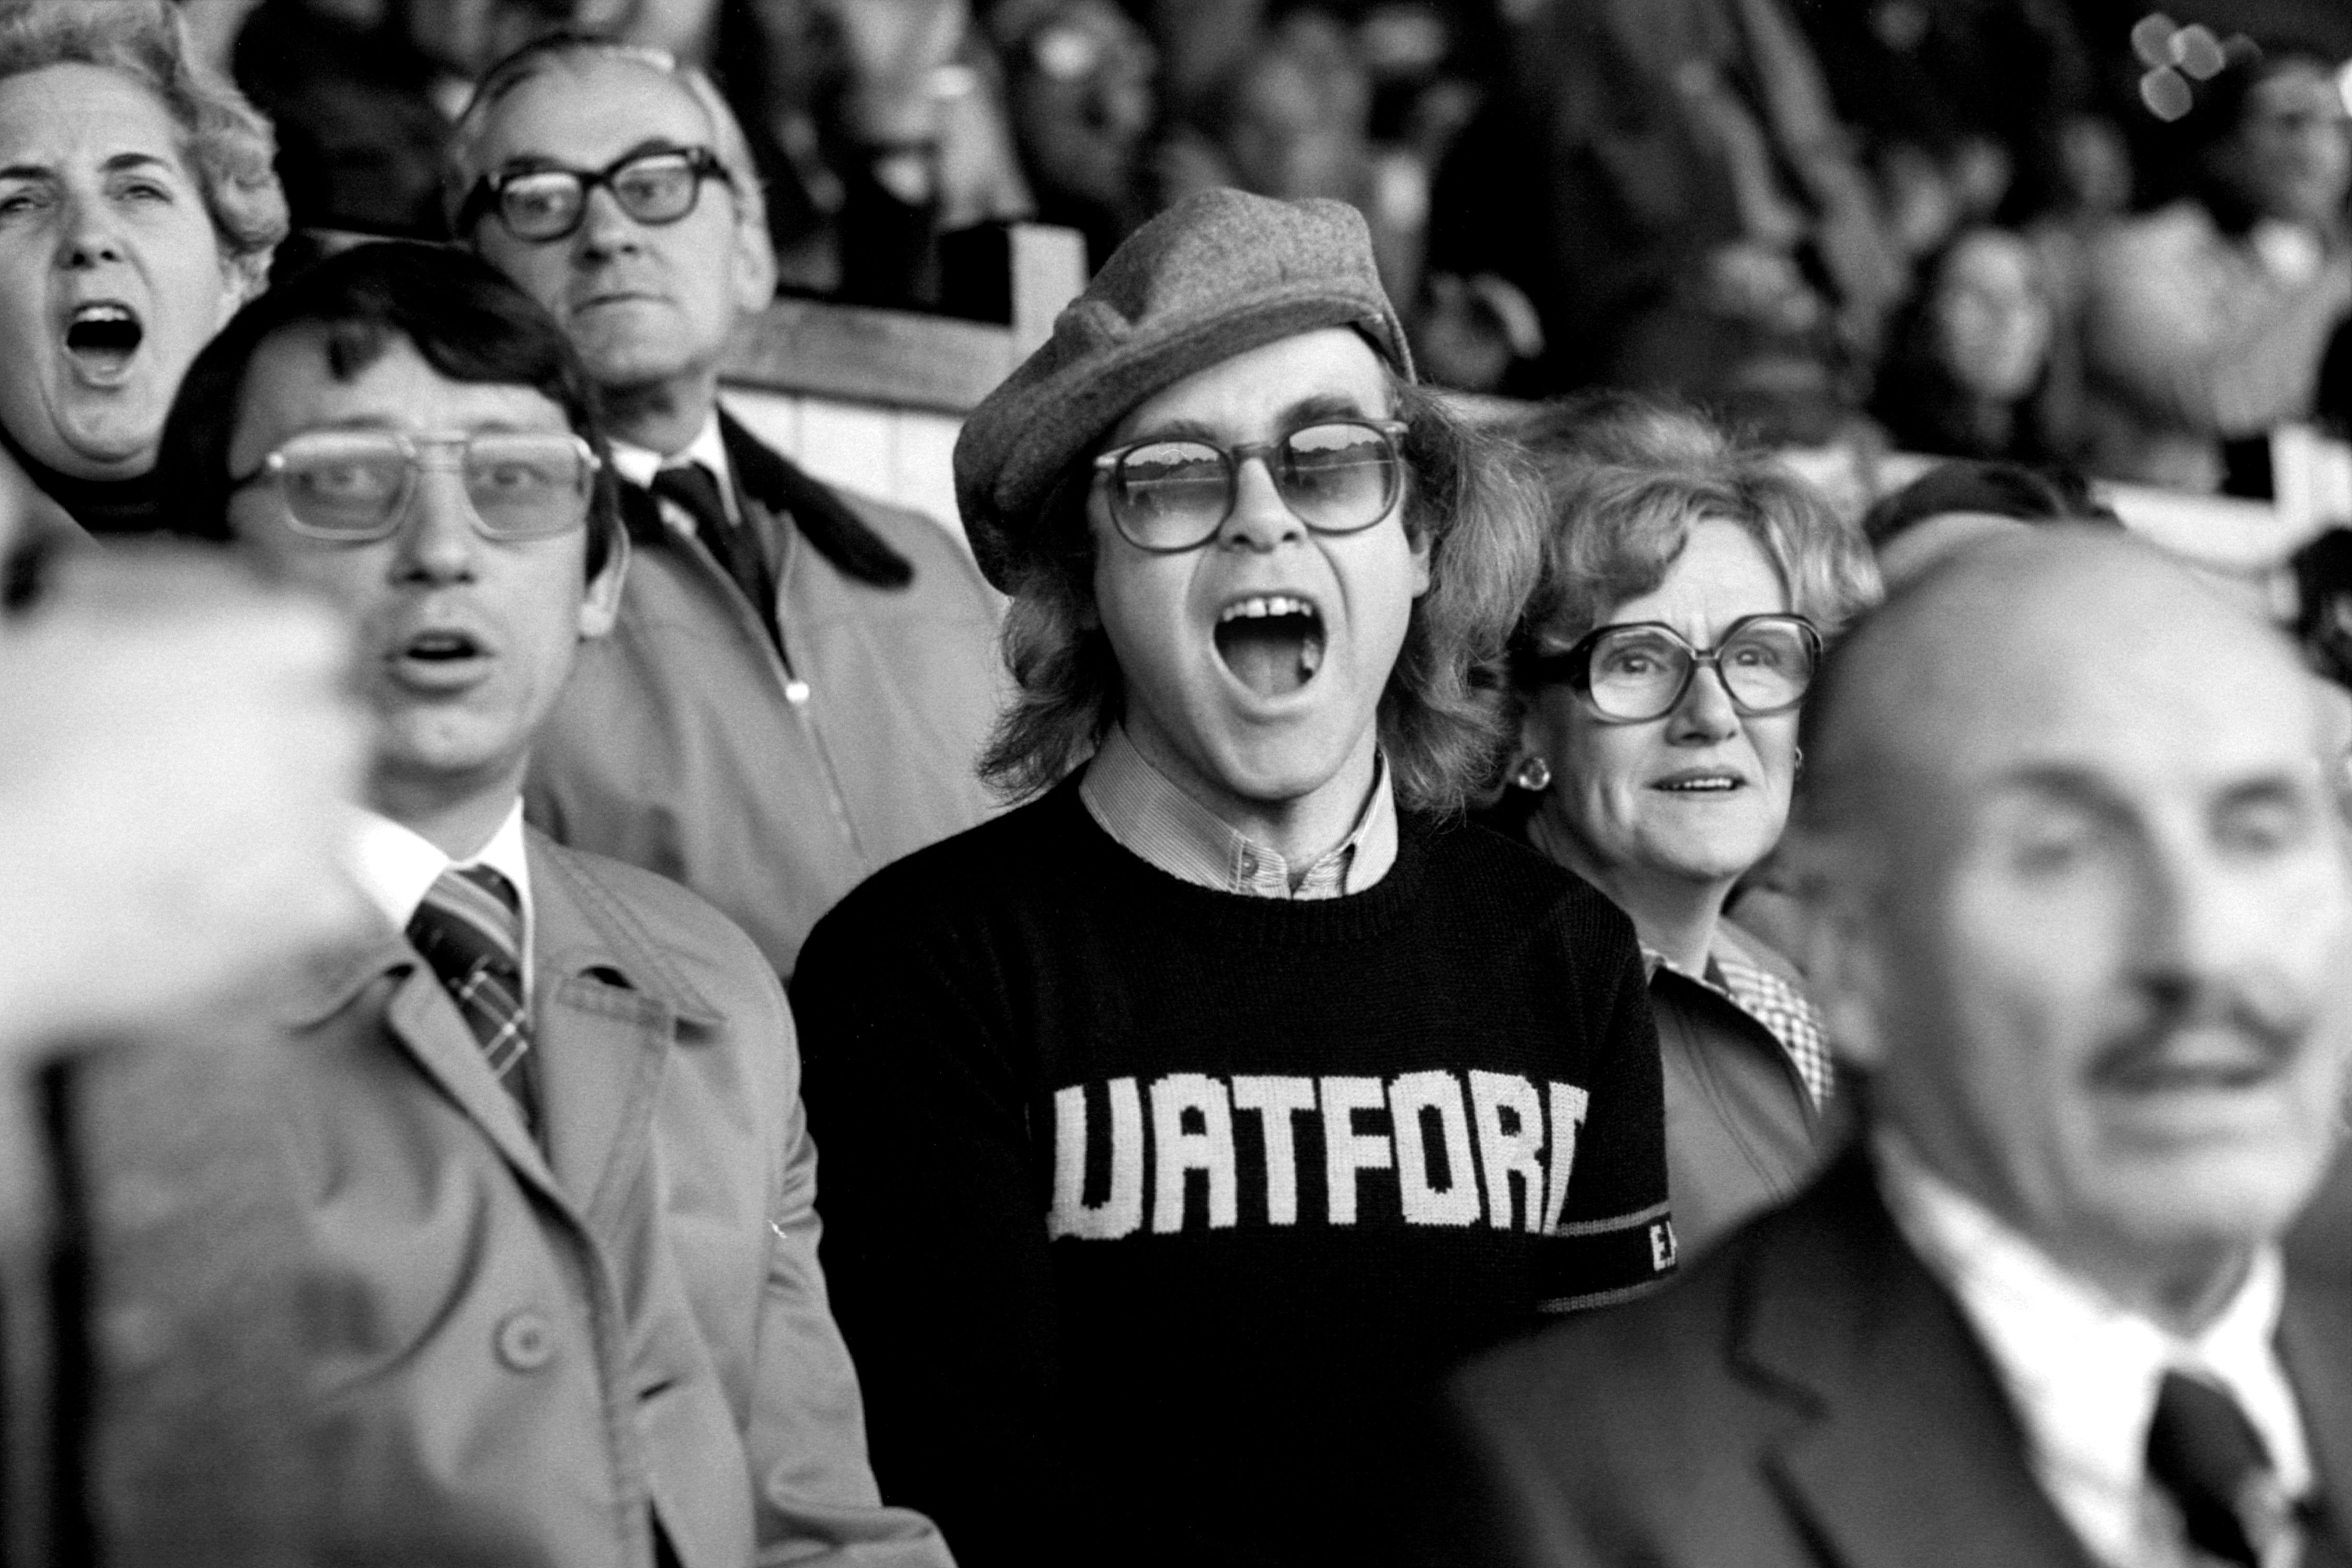 Watford manager Graham Taylor, left, and Elton John take in a match together